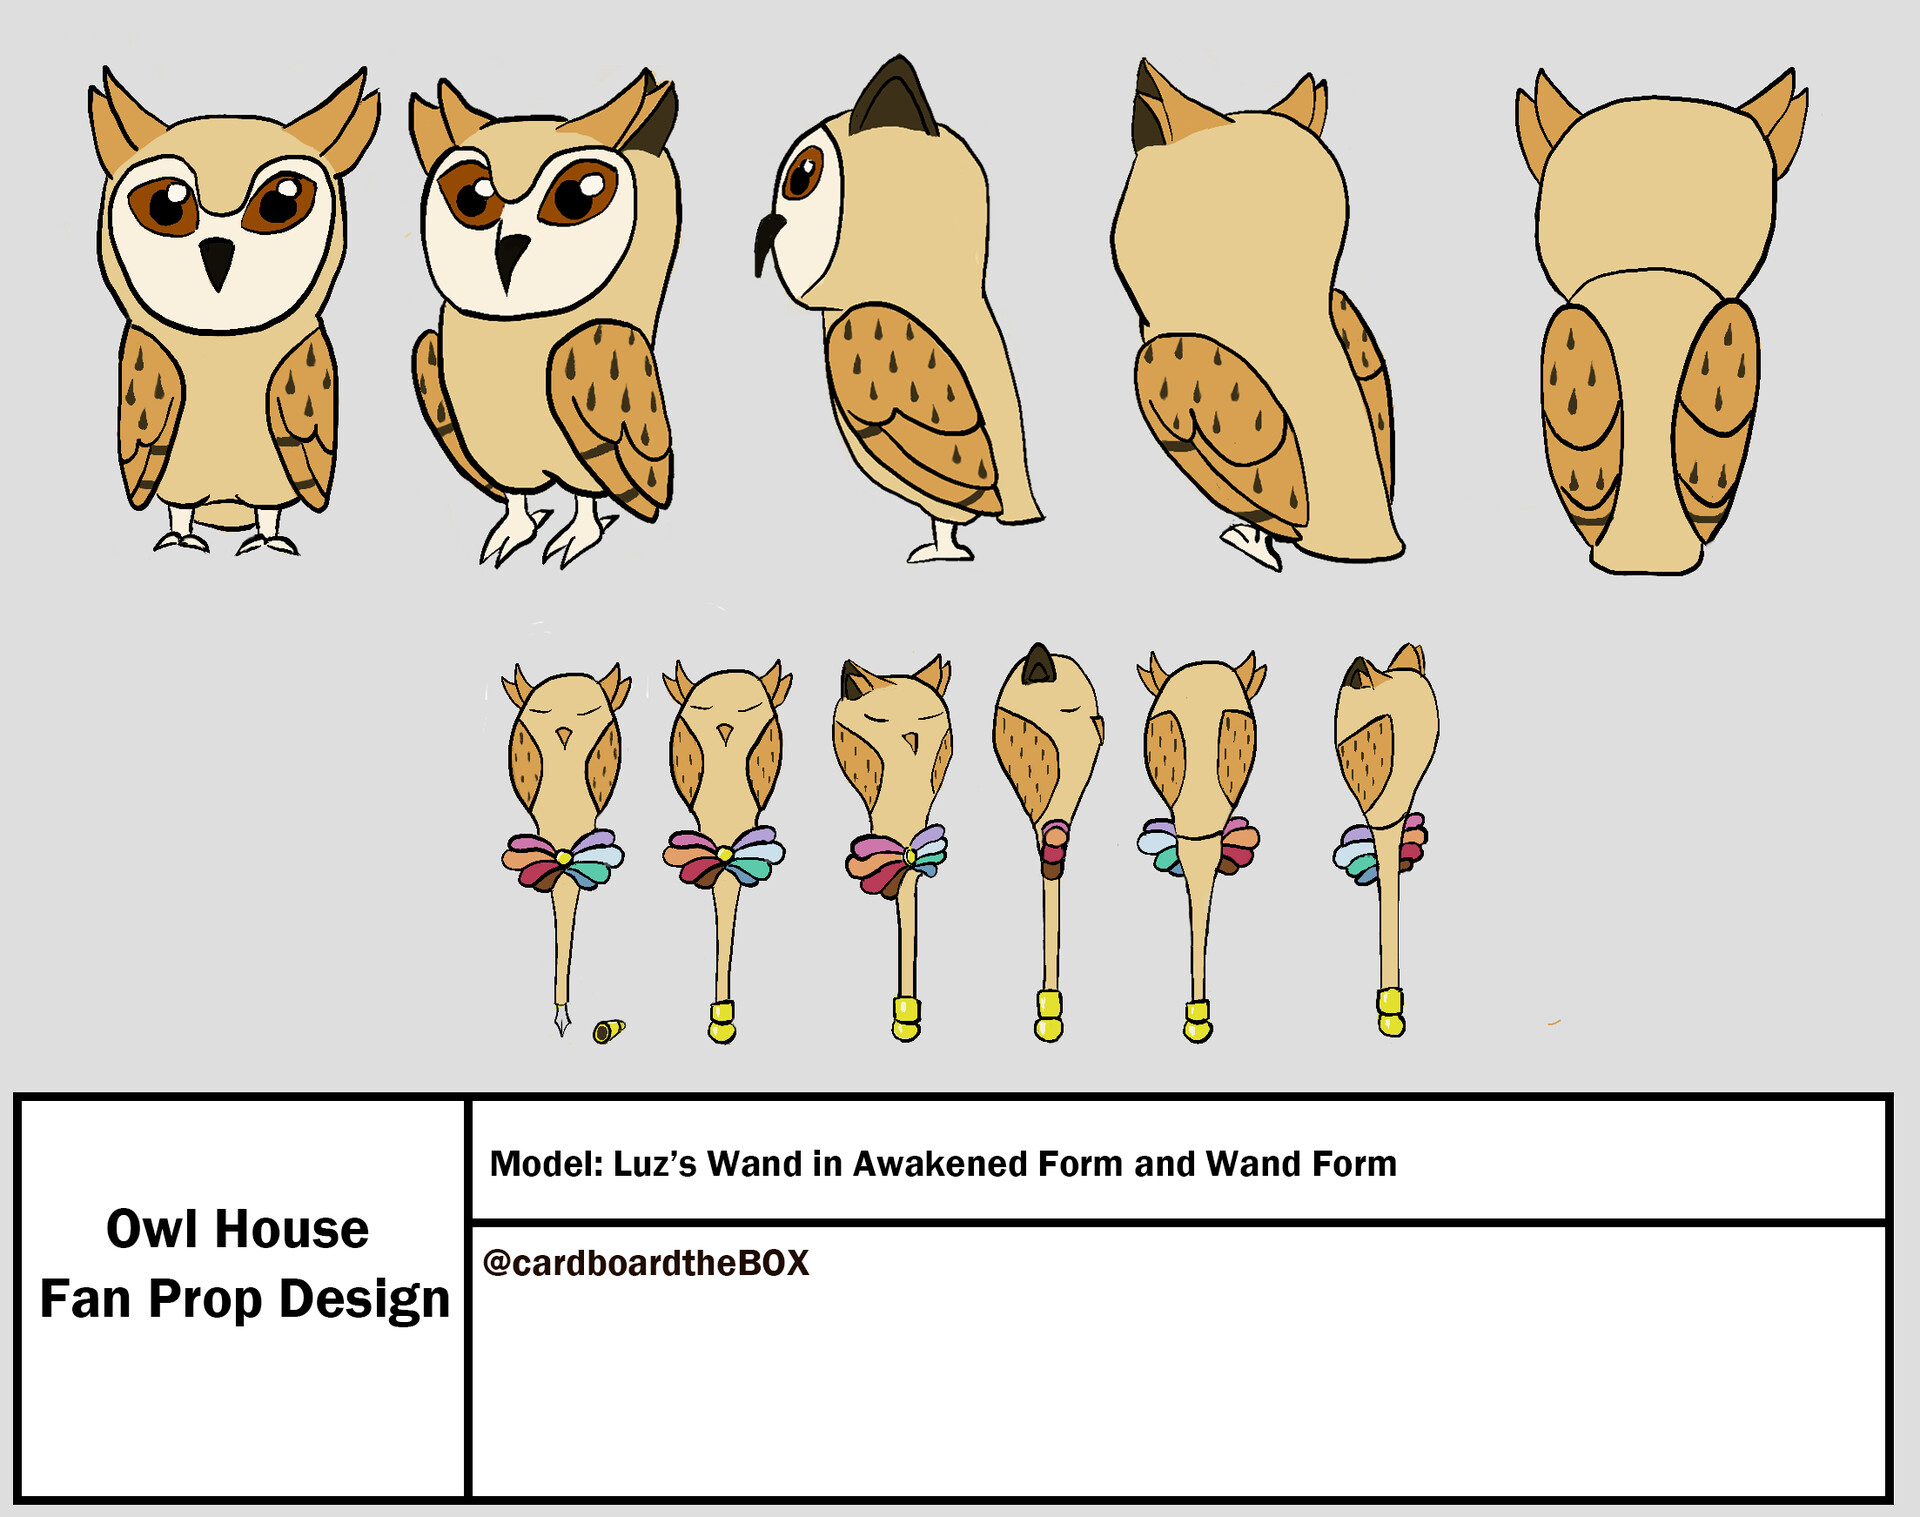 ArtStation - The Owl House Fan Art Character Design Practice